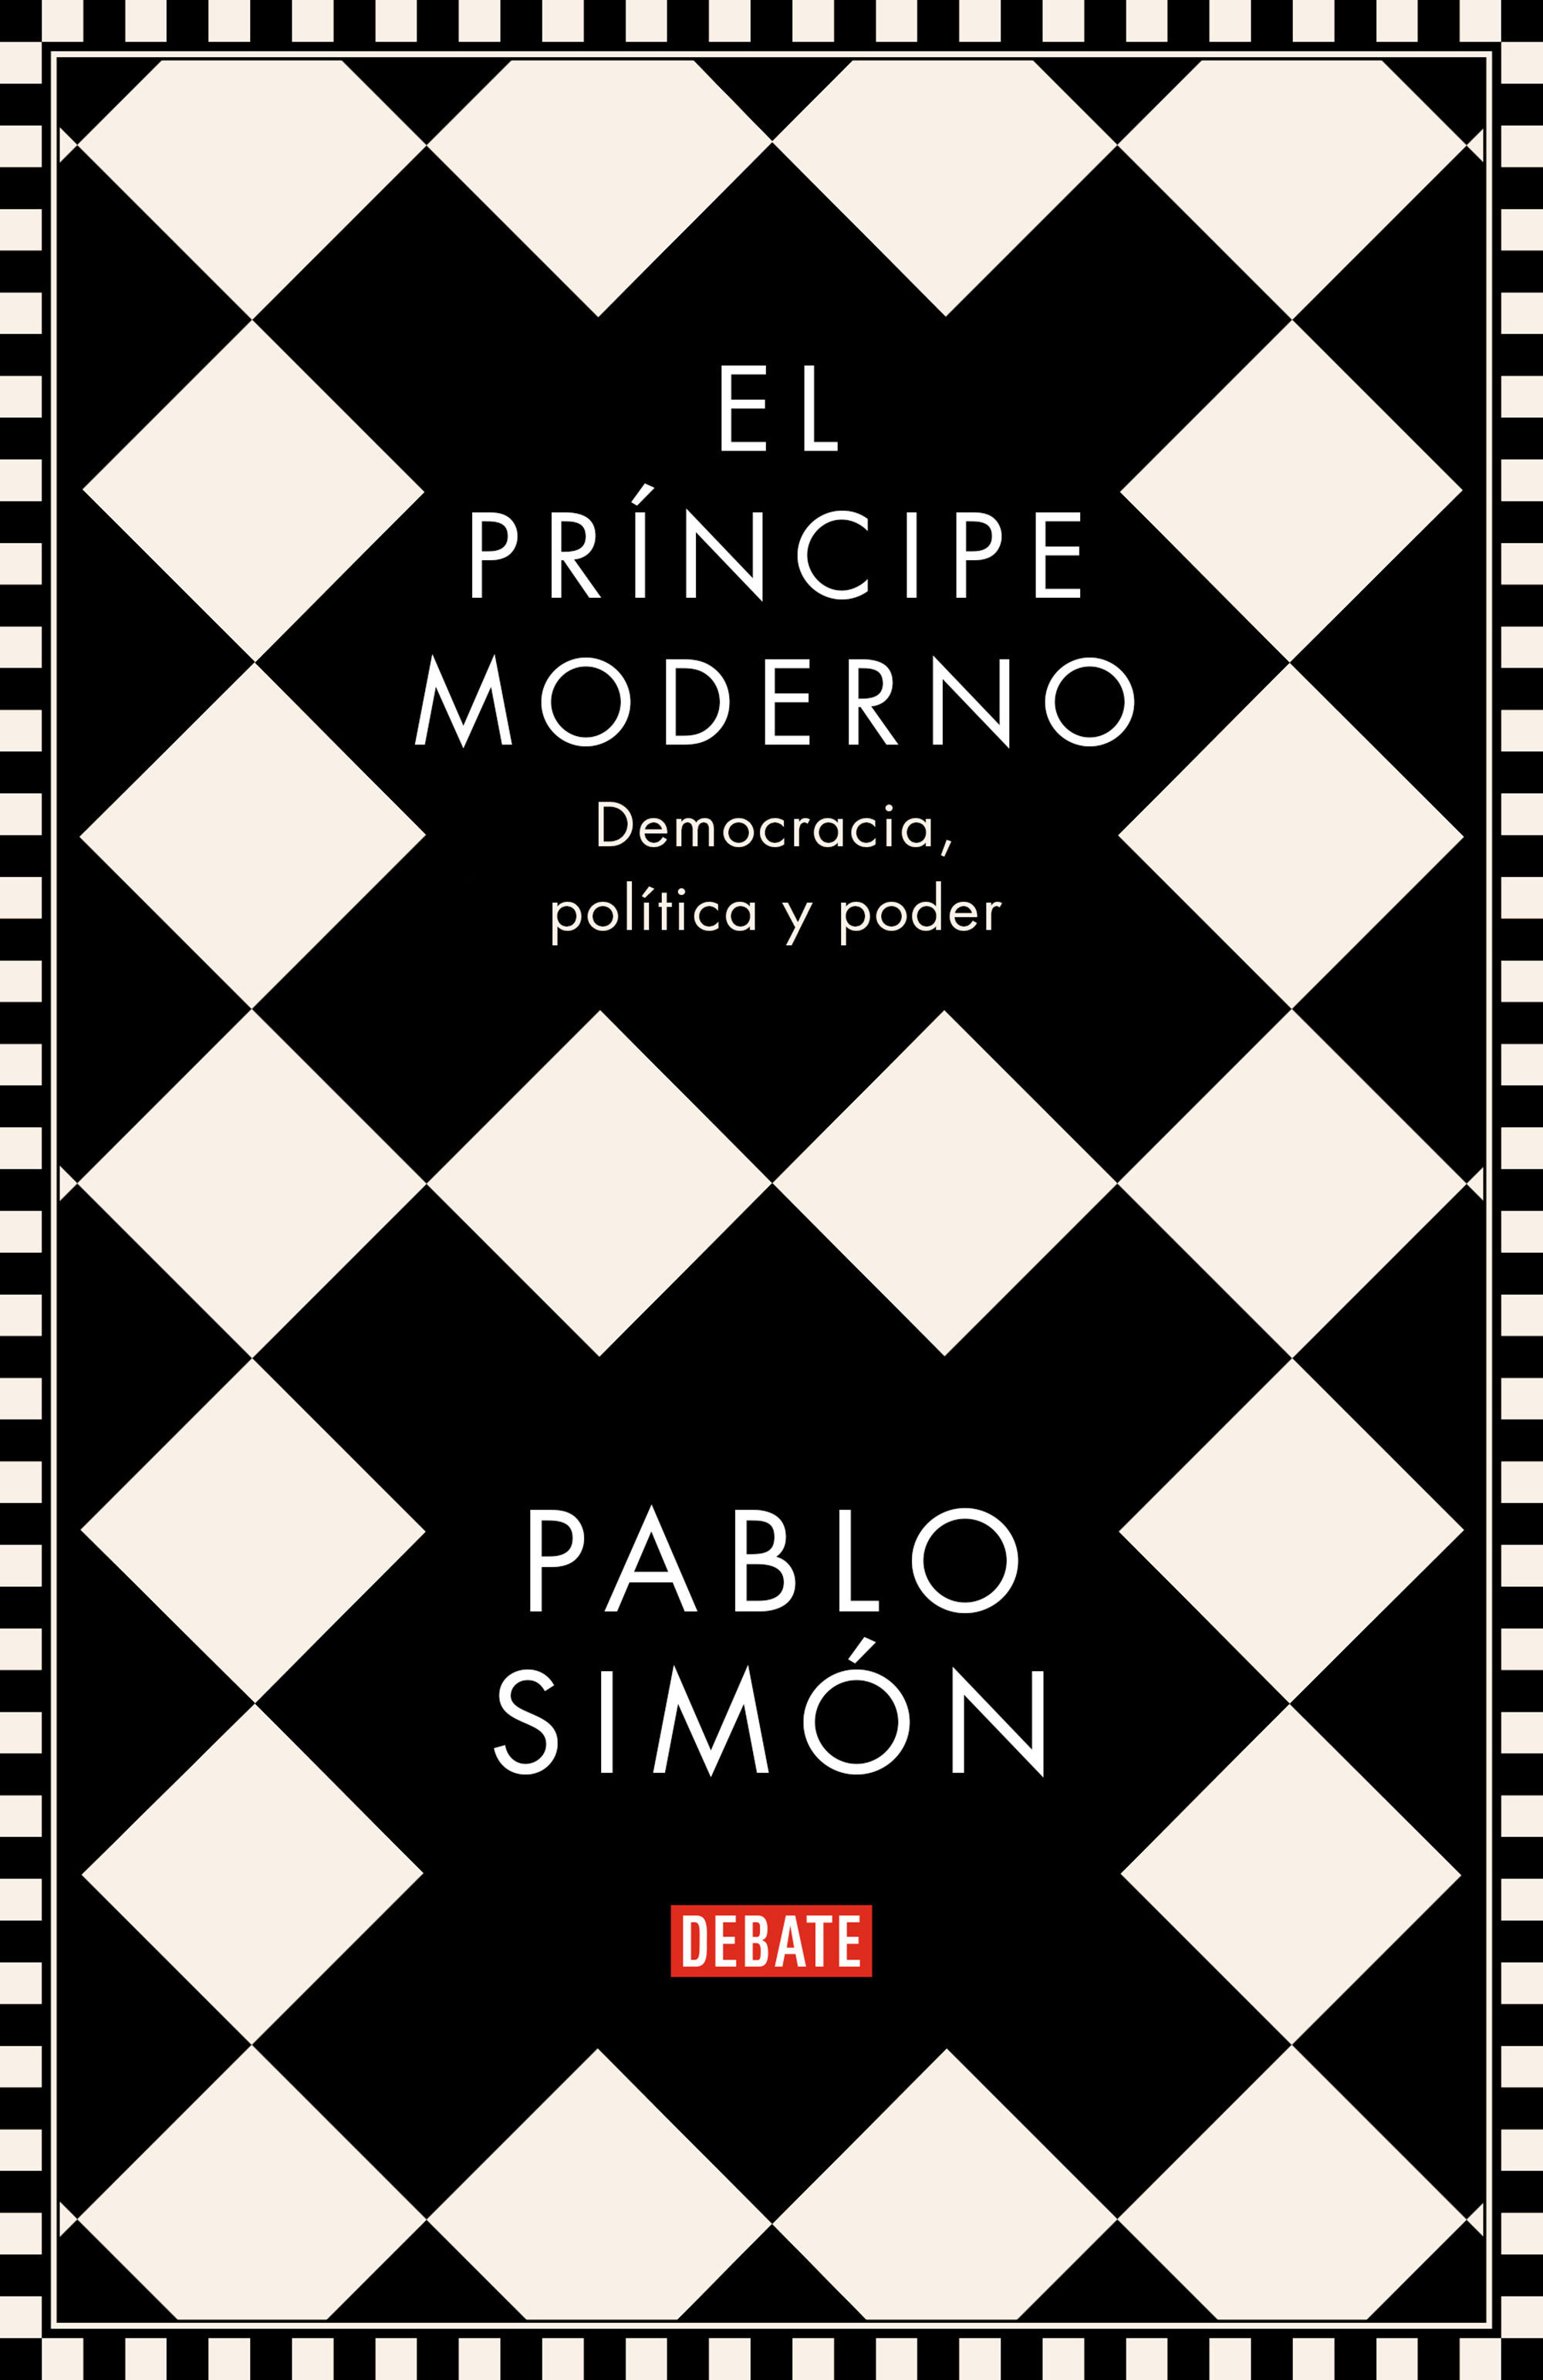 The modern prince: Democracy, politics and power.